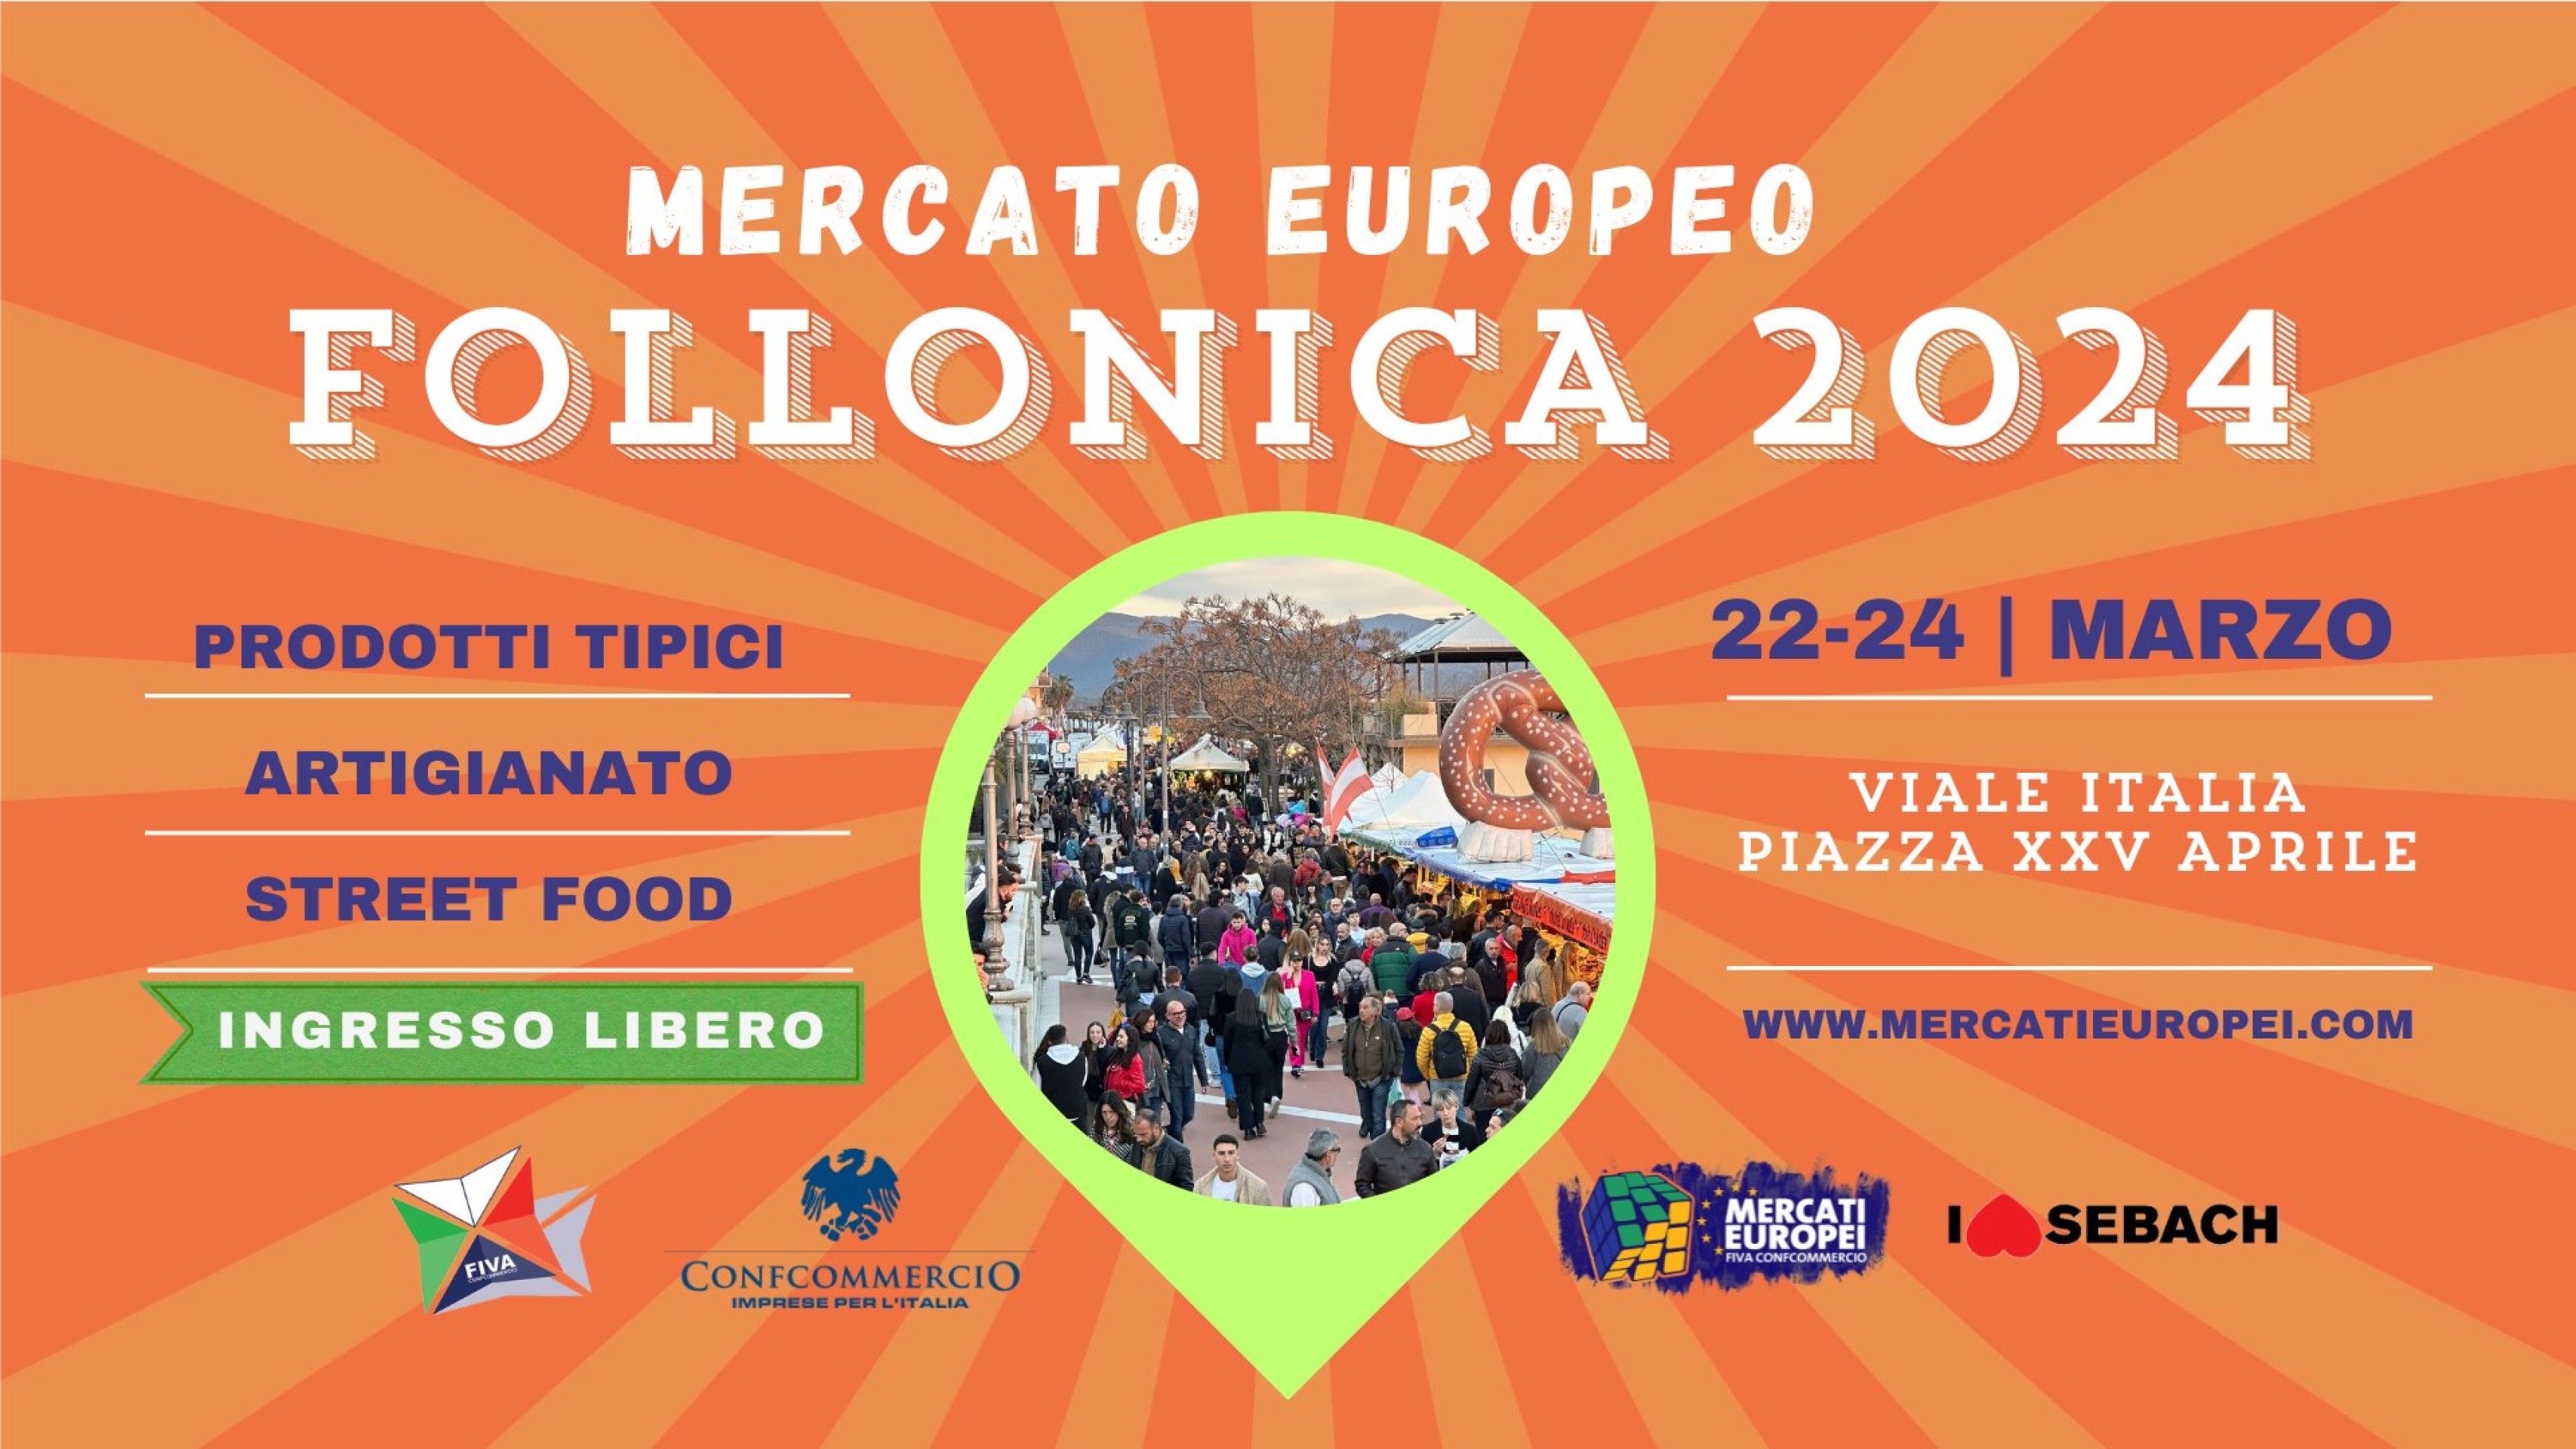 MERCATO EUROPEO FIVA - FOLLONICA 2024